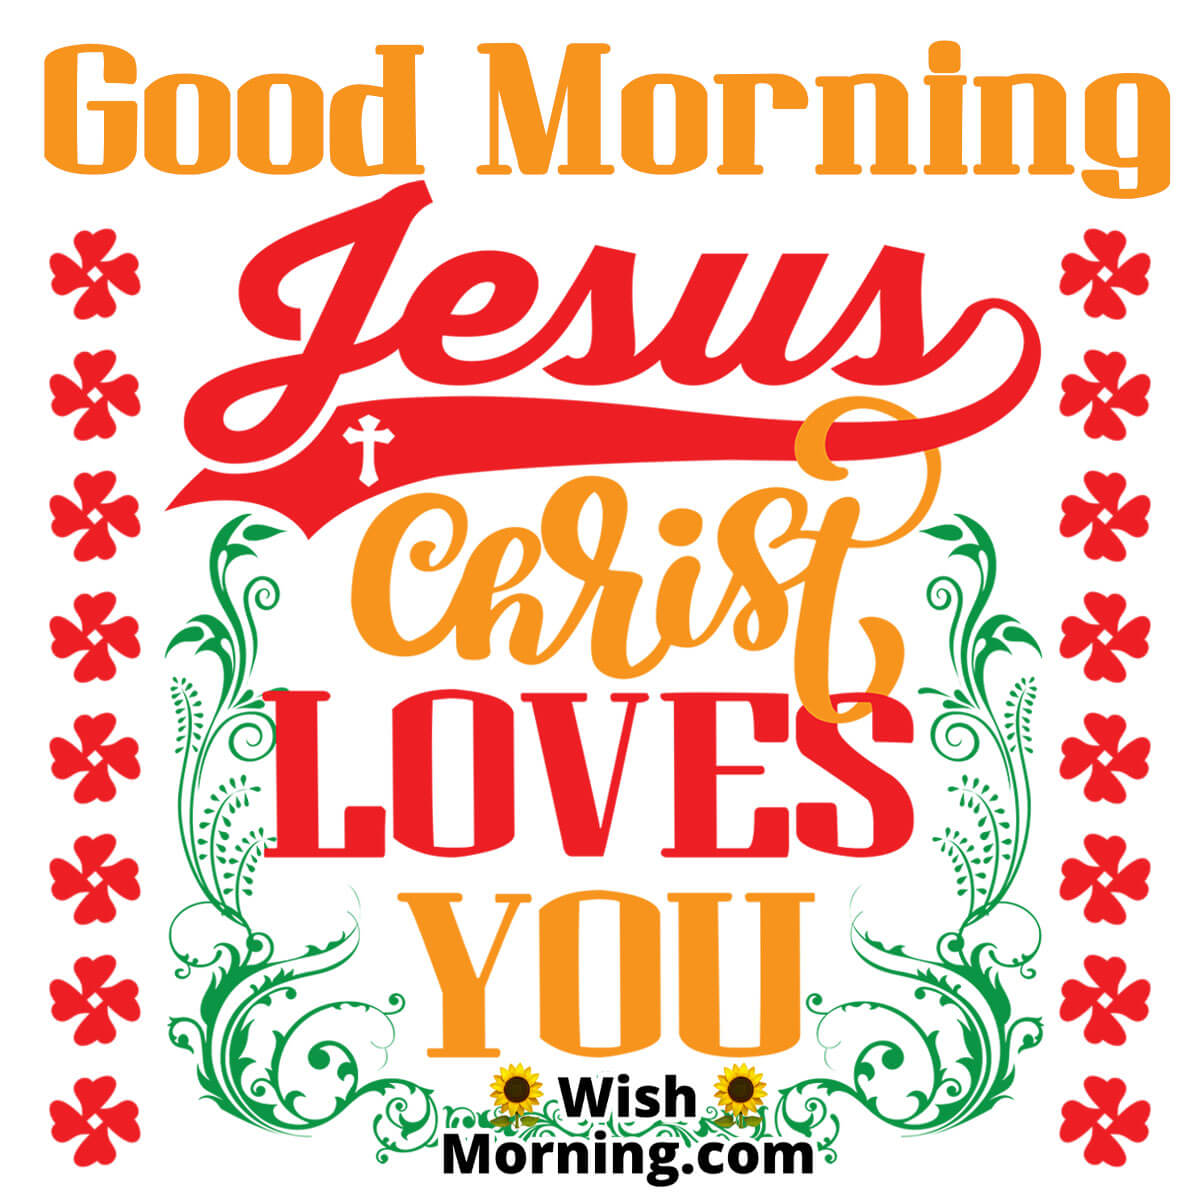 Good Morning Bible Quotes - Wish Morning